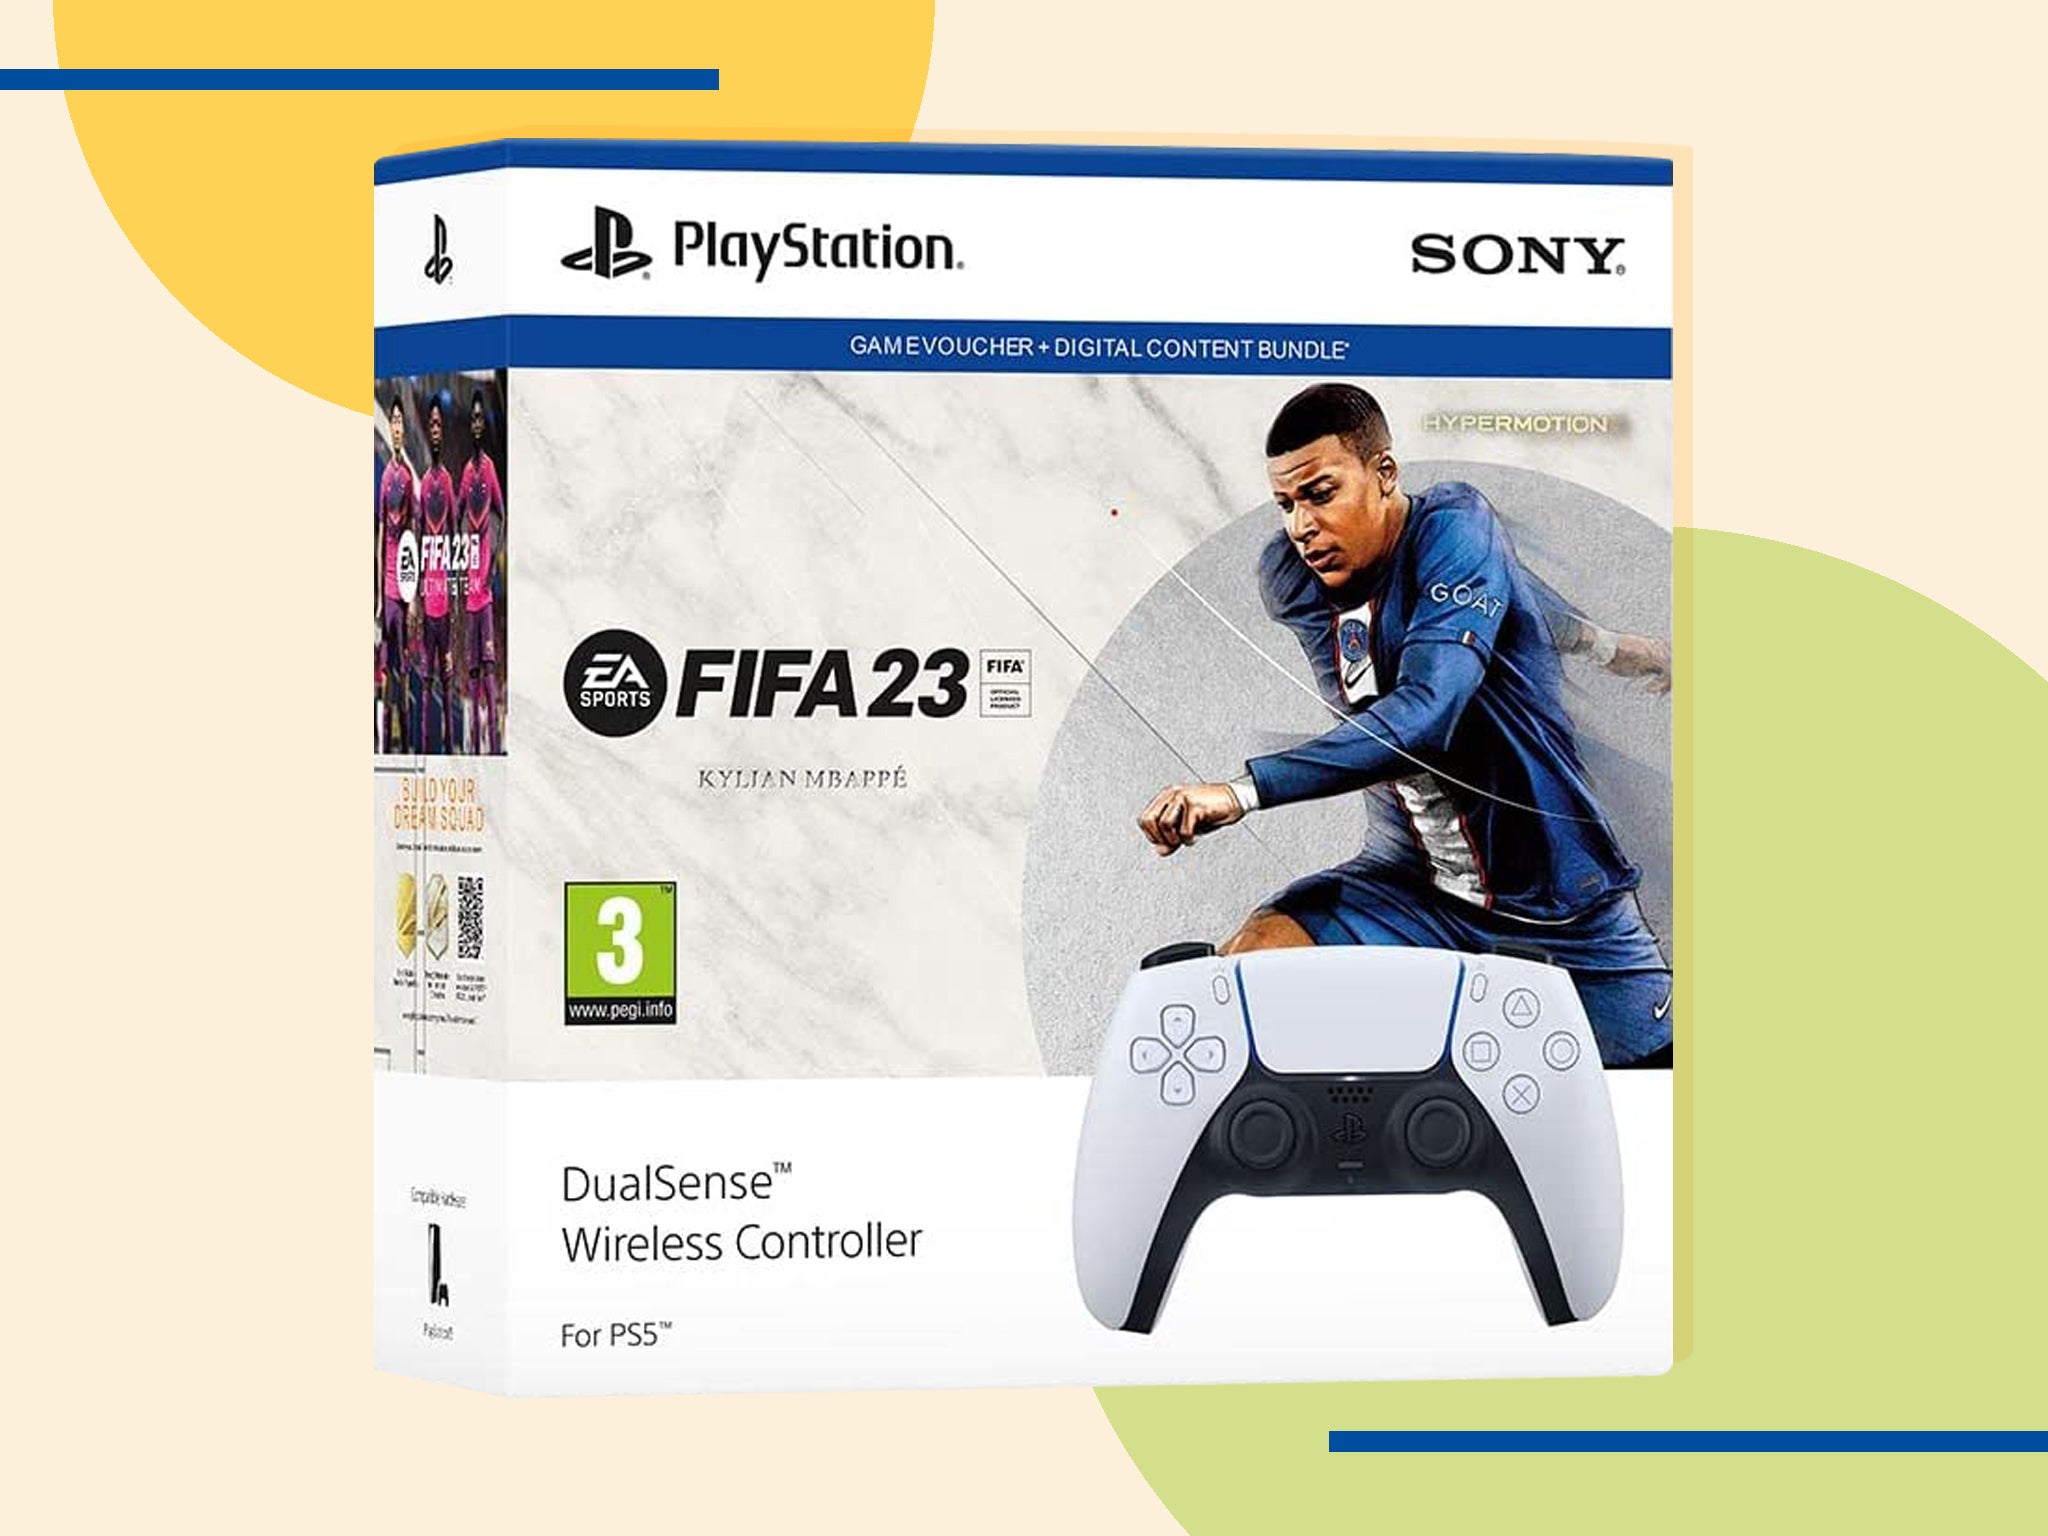 Save nearly £50 on FIFA 23 when you buy a PS5 dualsense controller